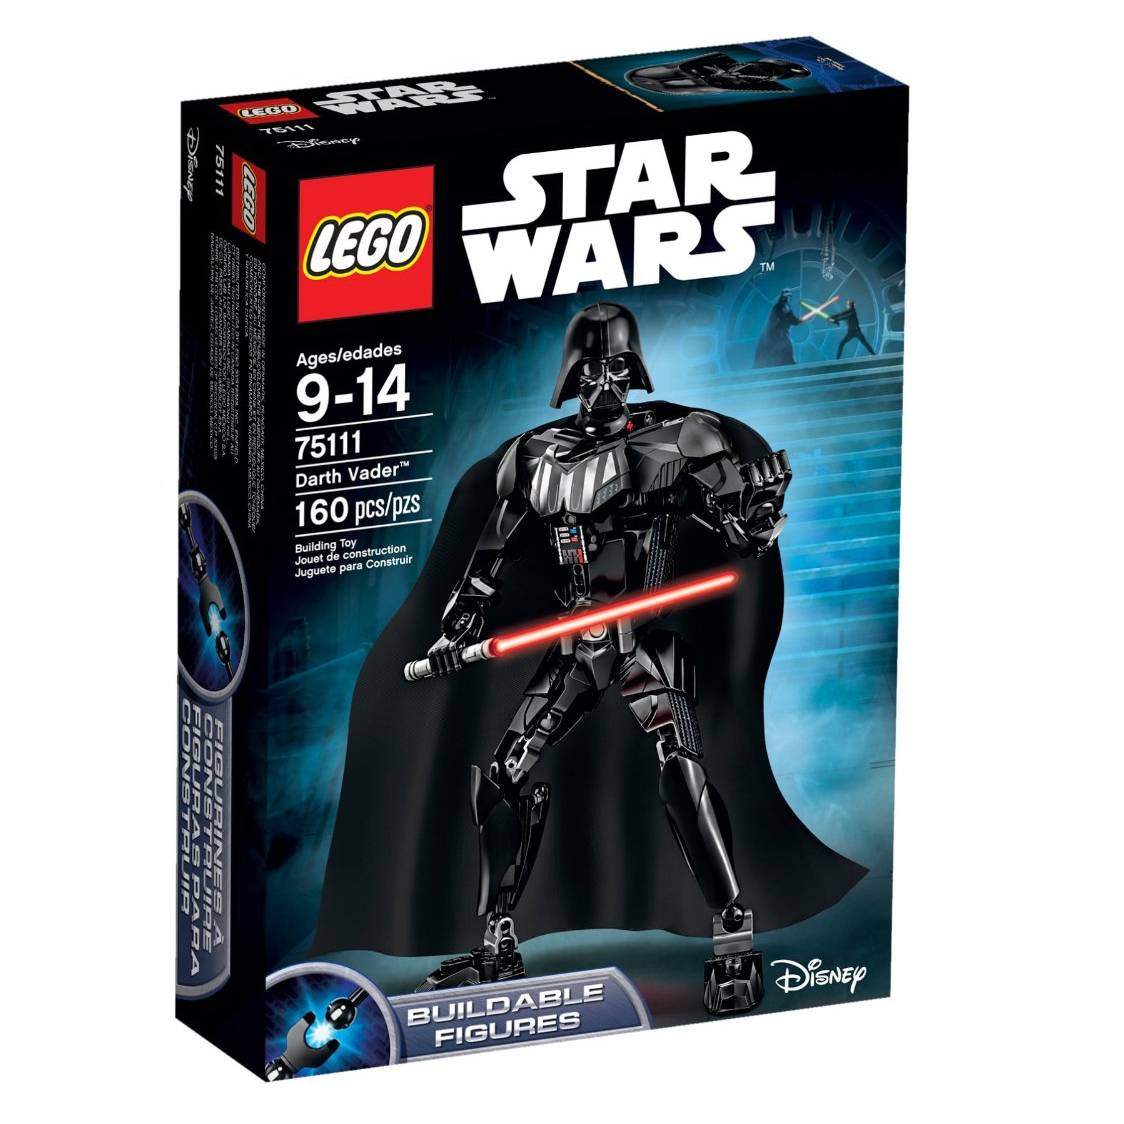 LEGO Star Wars 75111 Darth Vader Building Kit Only $19.37!